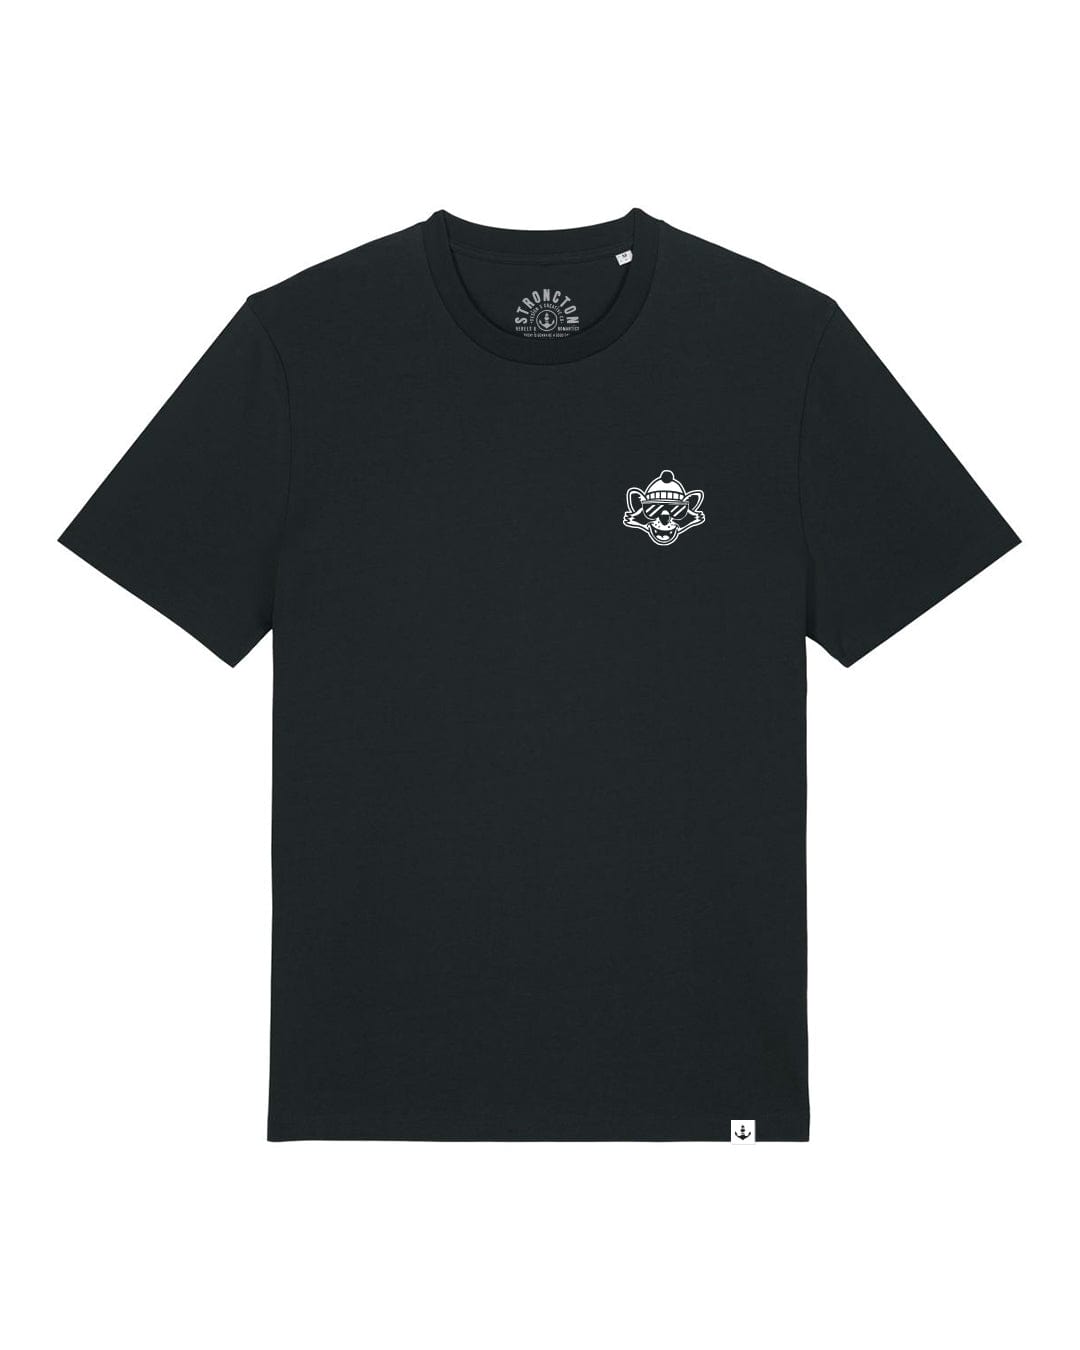 Stoked Fred Organic T-Shirt - Black